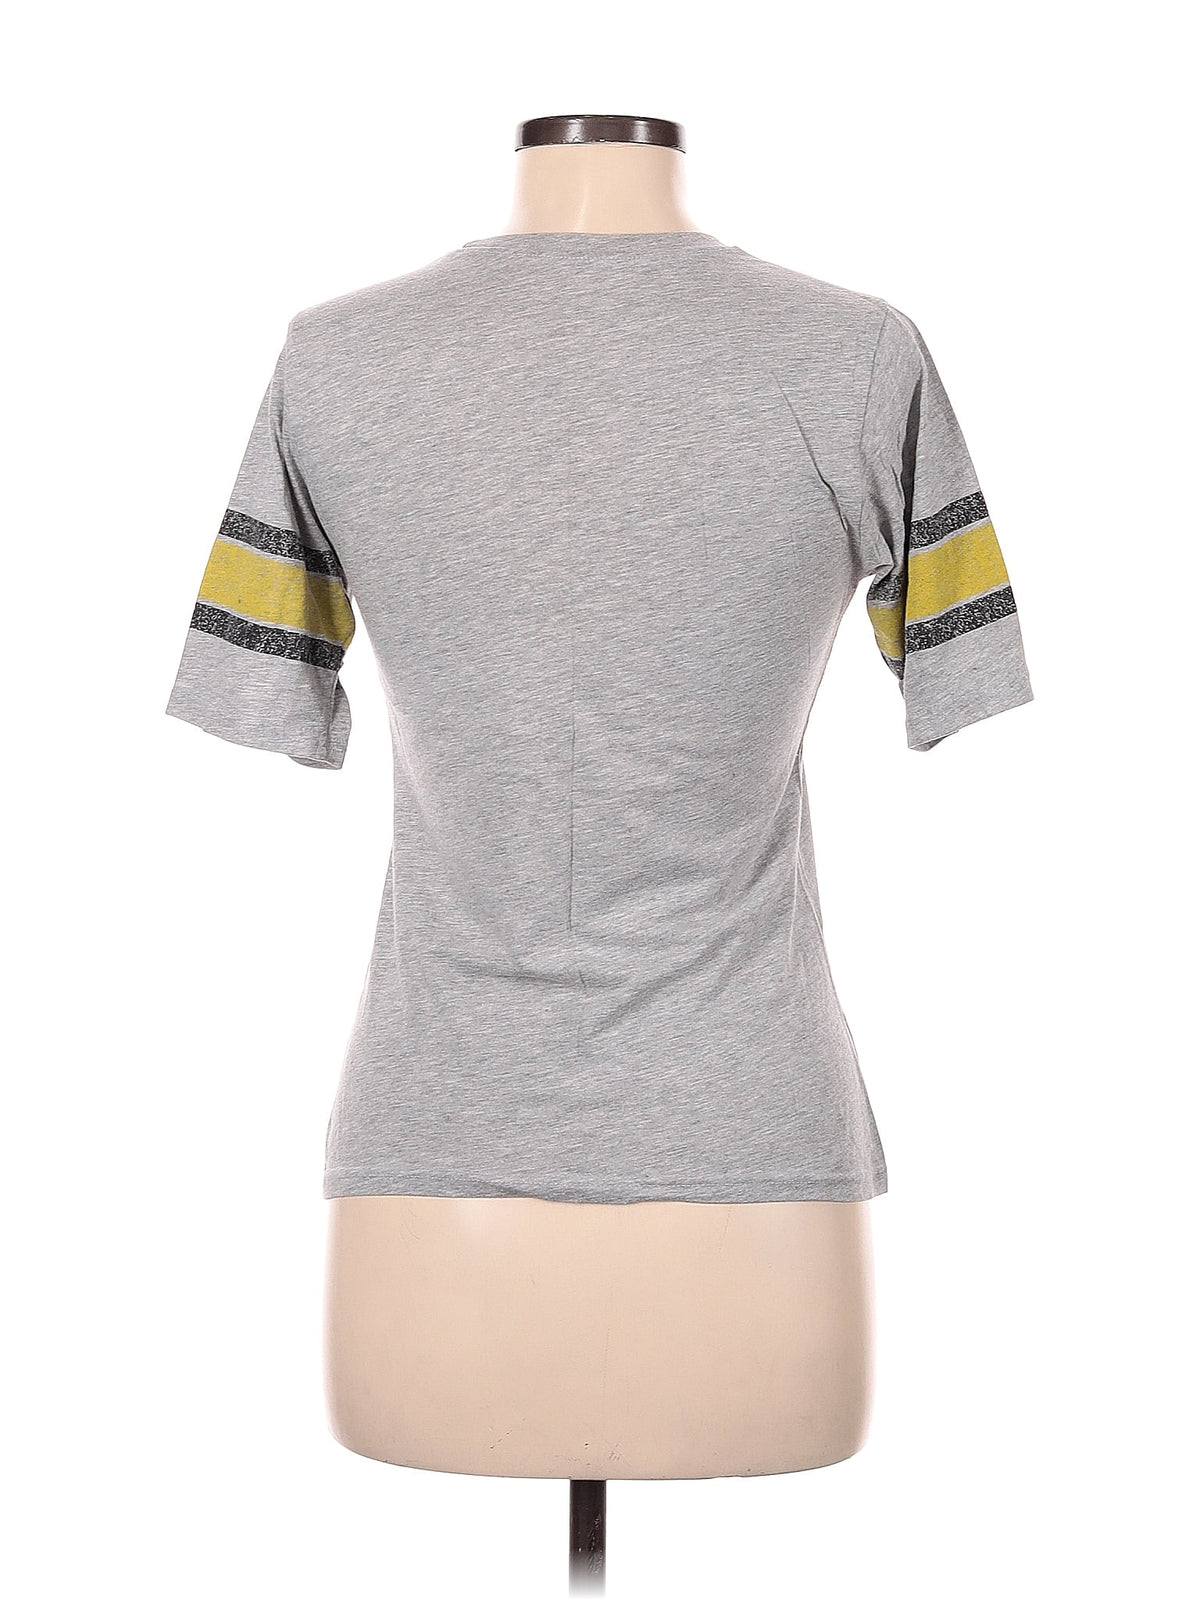 Short Sleeve T Shirt size - M